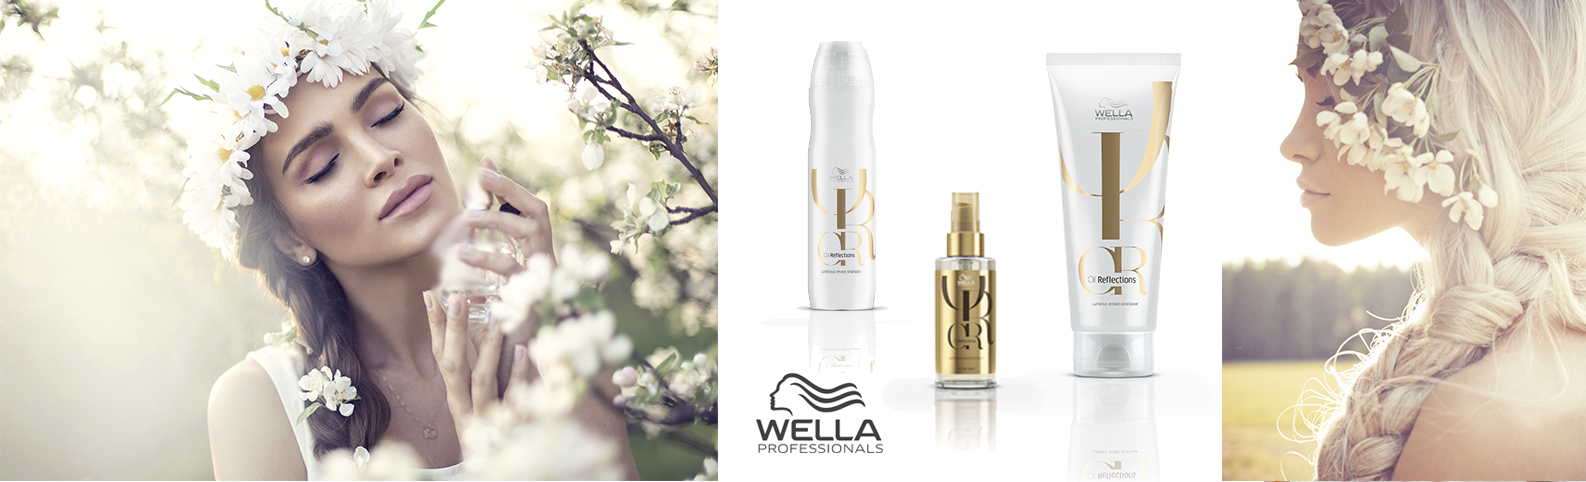 Panelene testar Wella Professionals nya hårserie ”Oil Reflections”